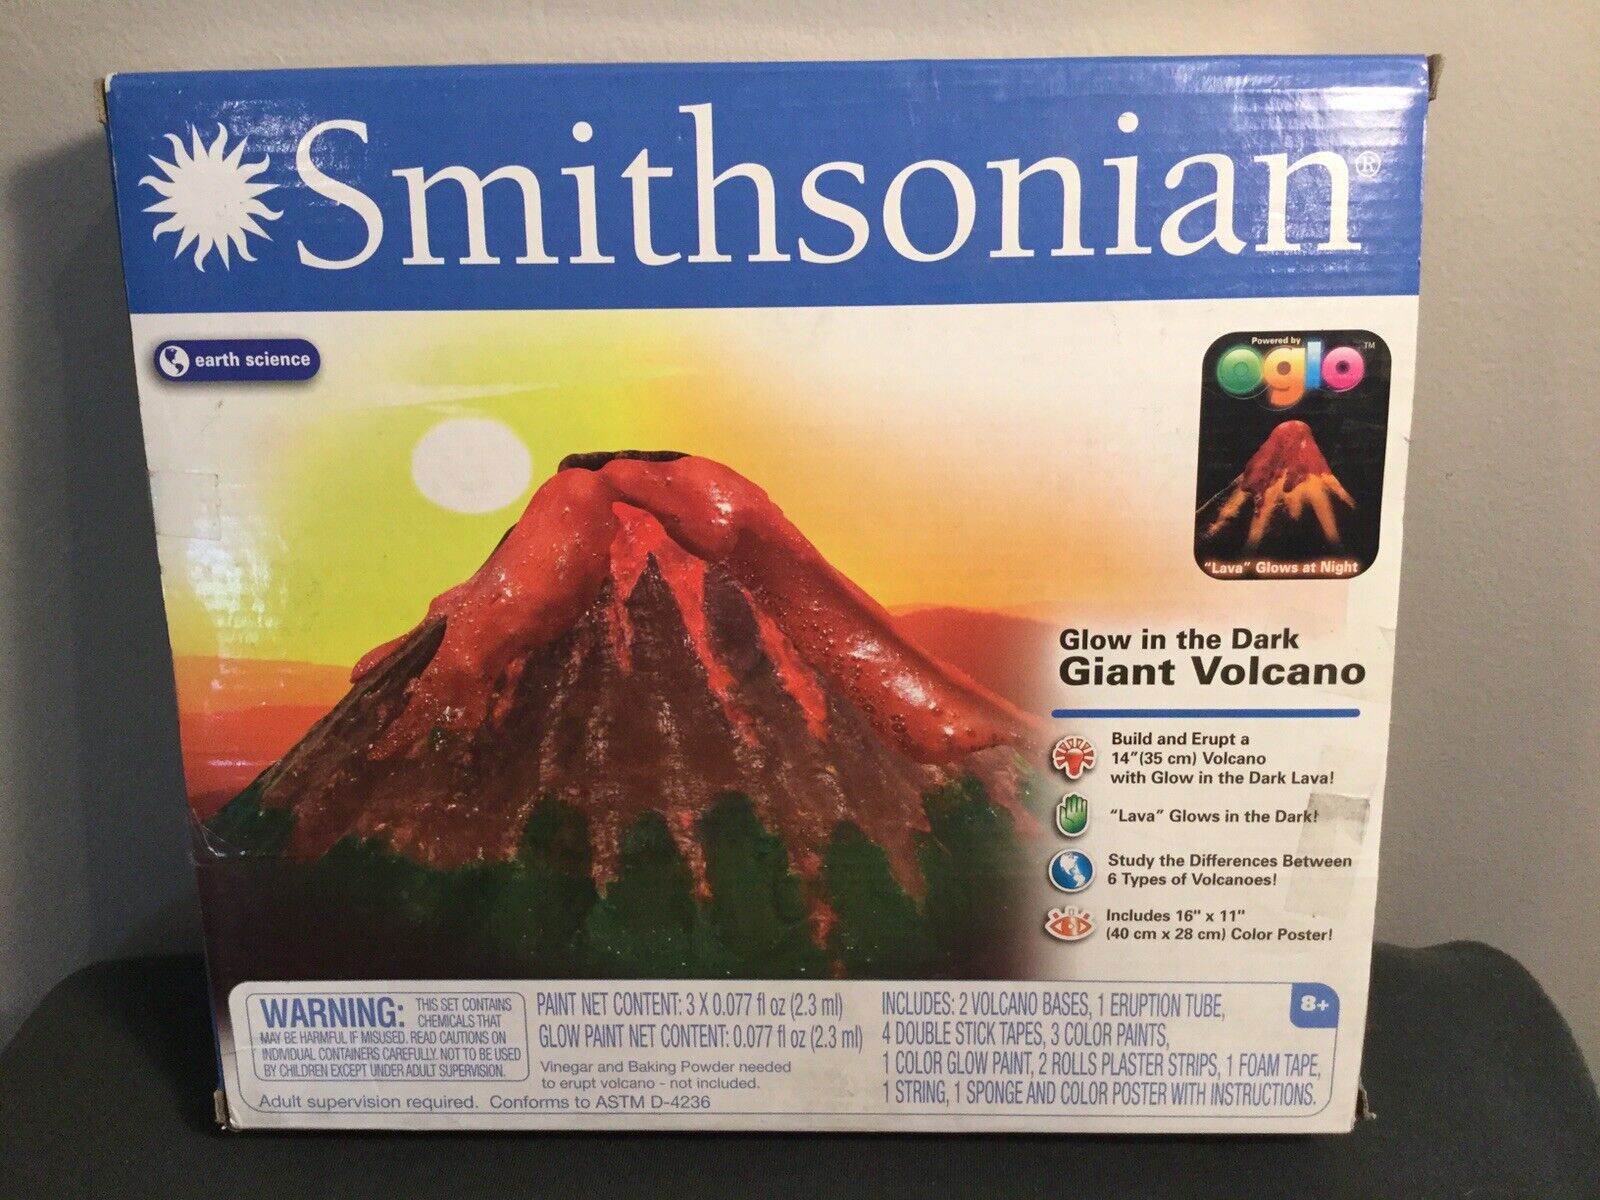 Smithsonian Earth Science Glow in the Dark Giant Volcano Kit/Model - New Sealed